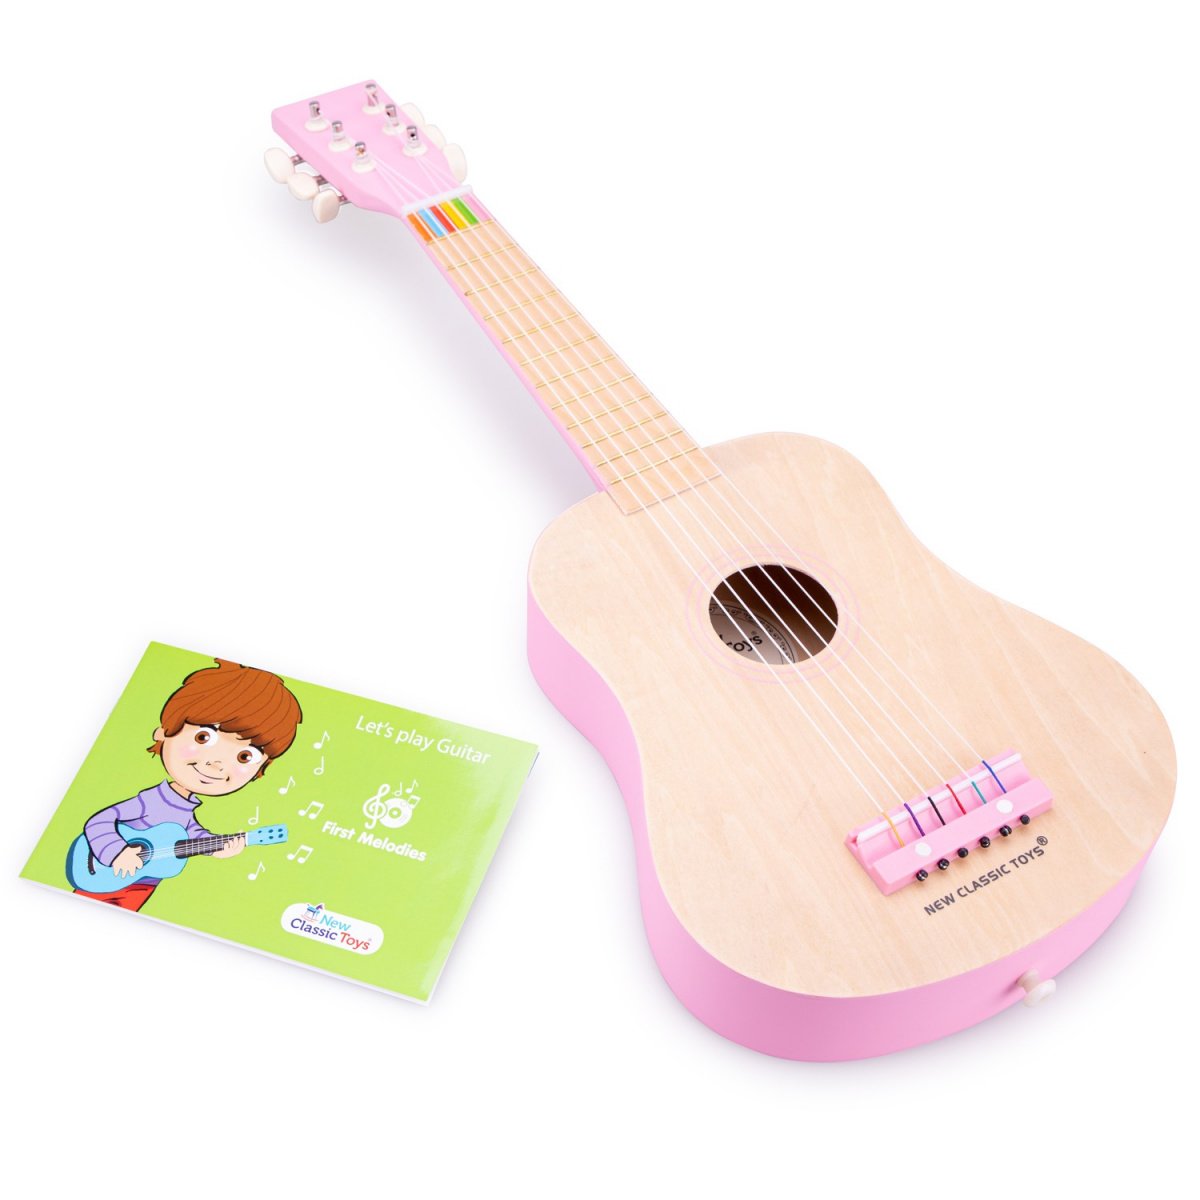 Дитяча гітара New Classic Toys рожева (10302) - фото 2